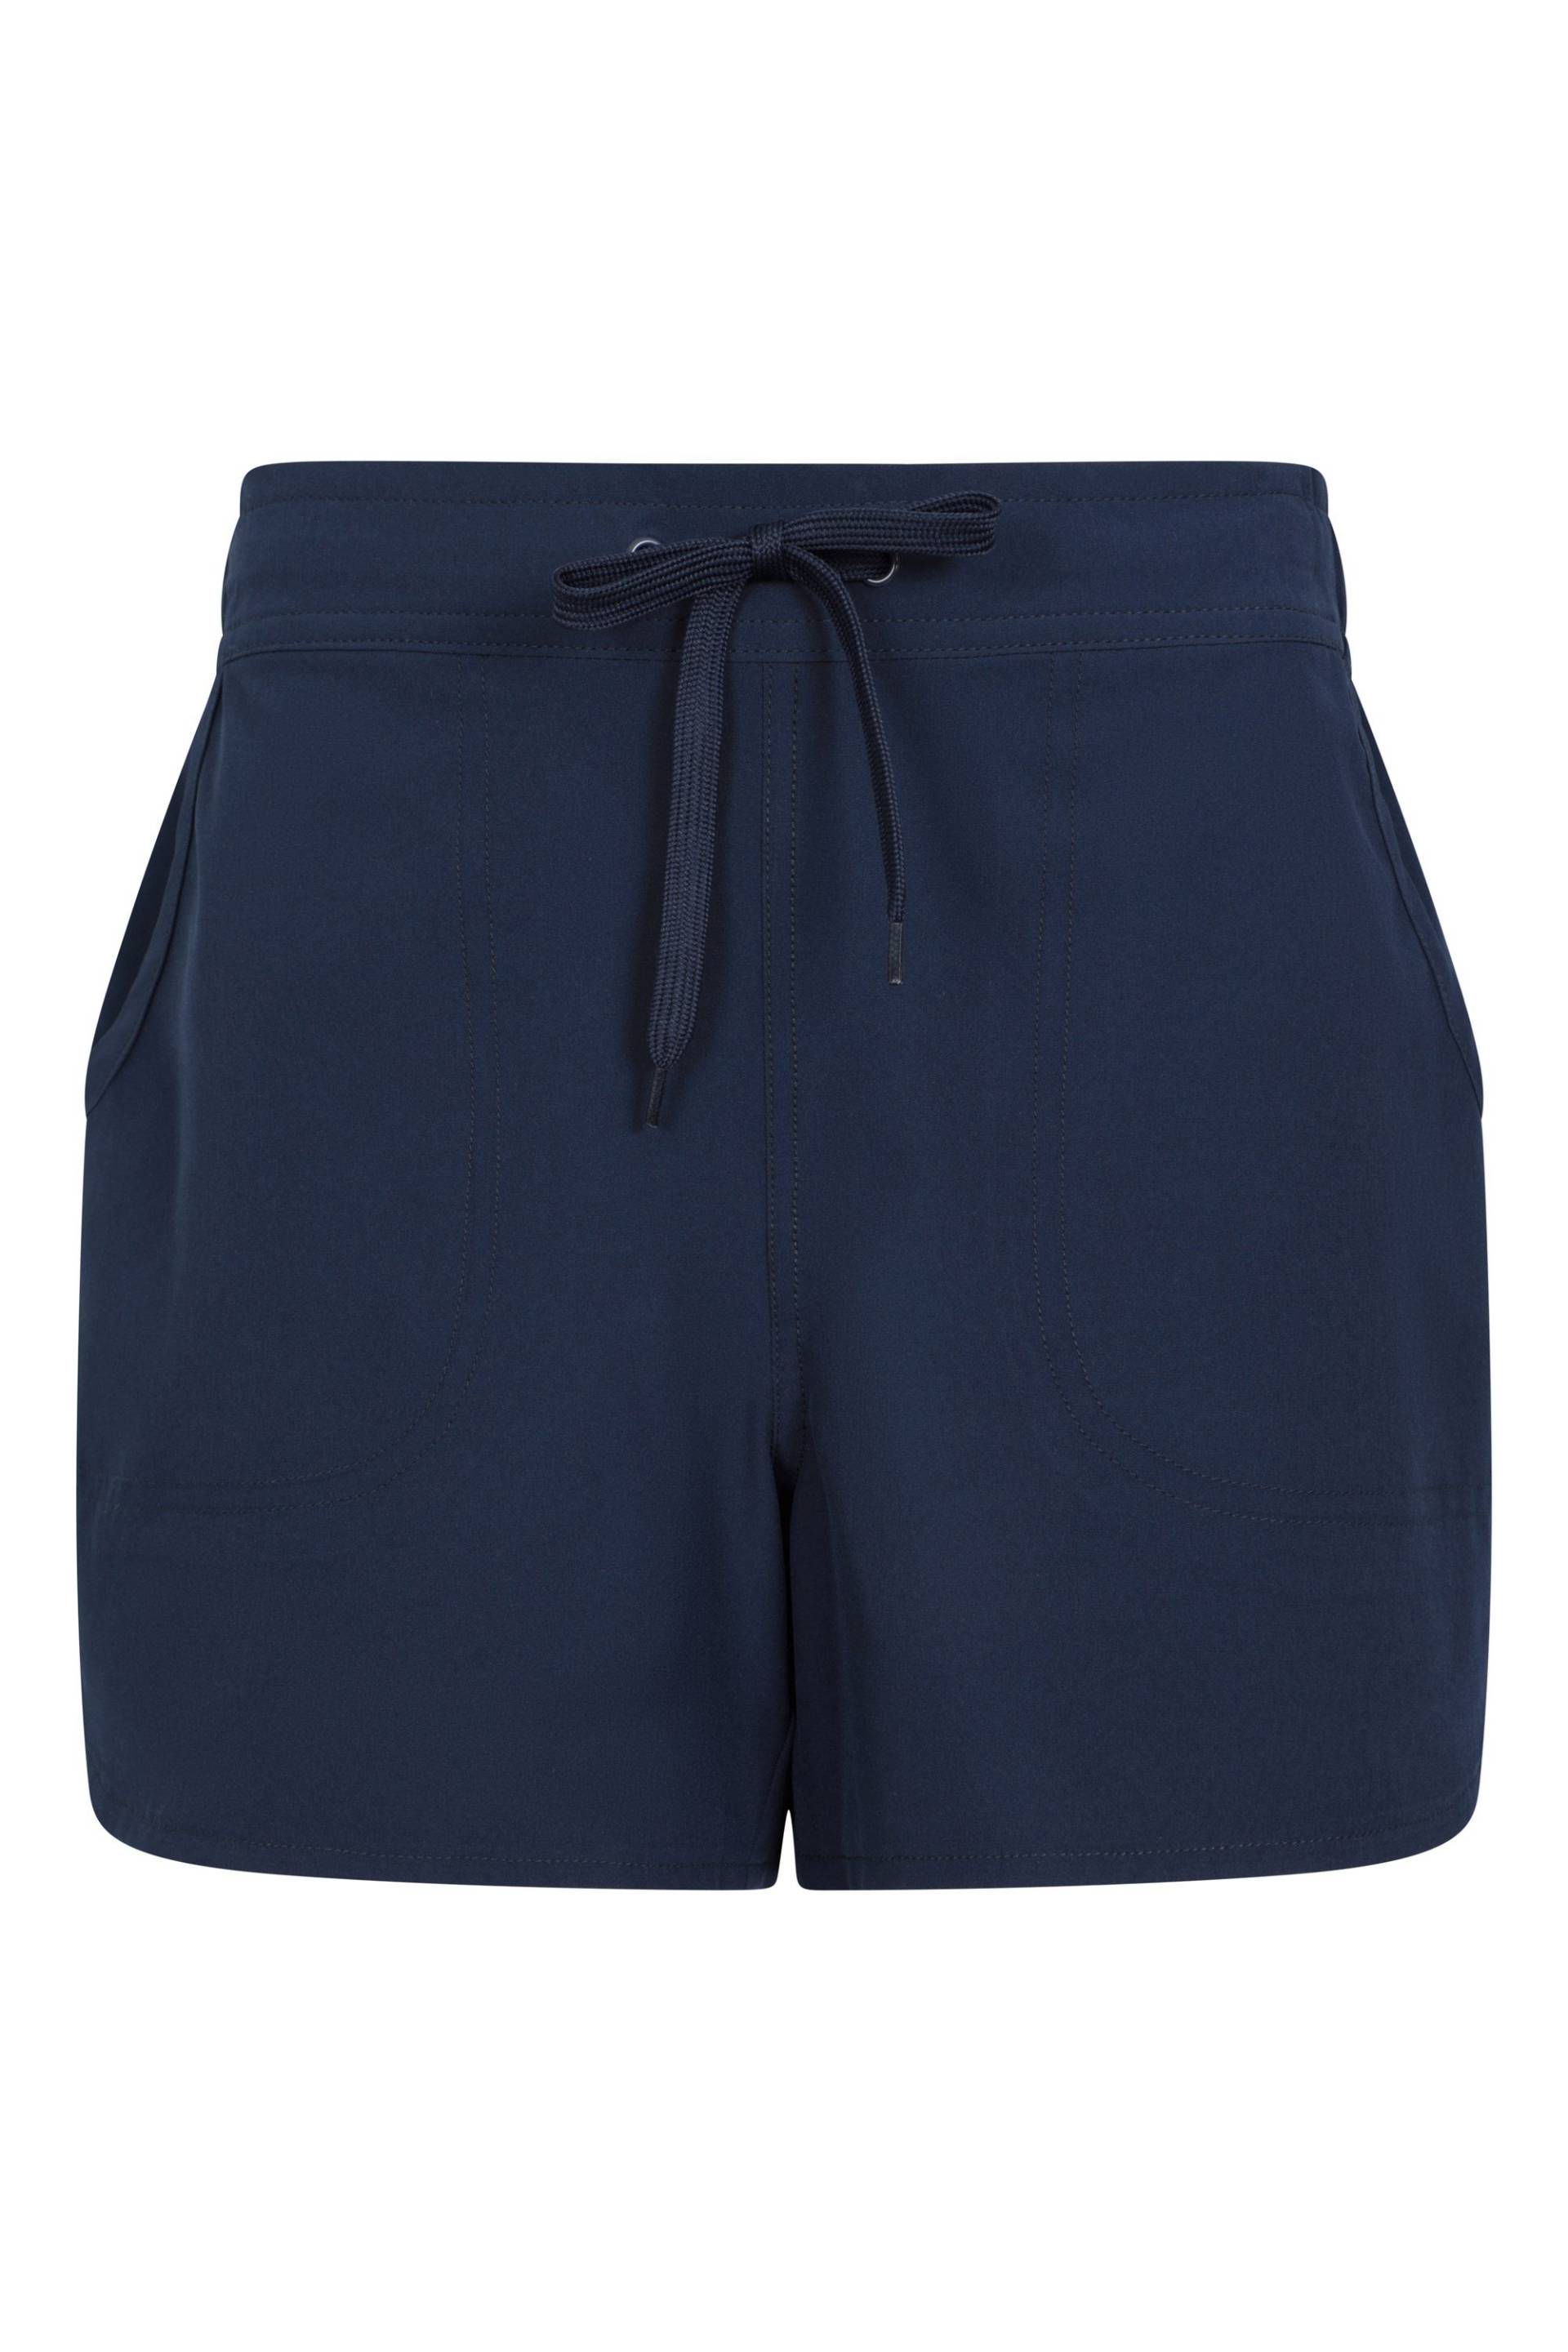 Damen Stretch-Board-Shorts - Marineblau von Mountain Warehouse